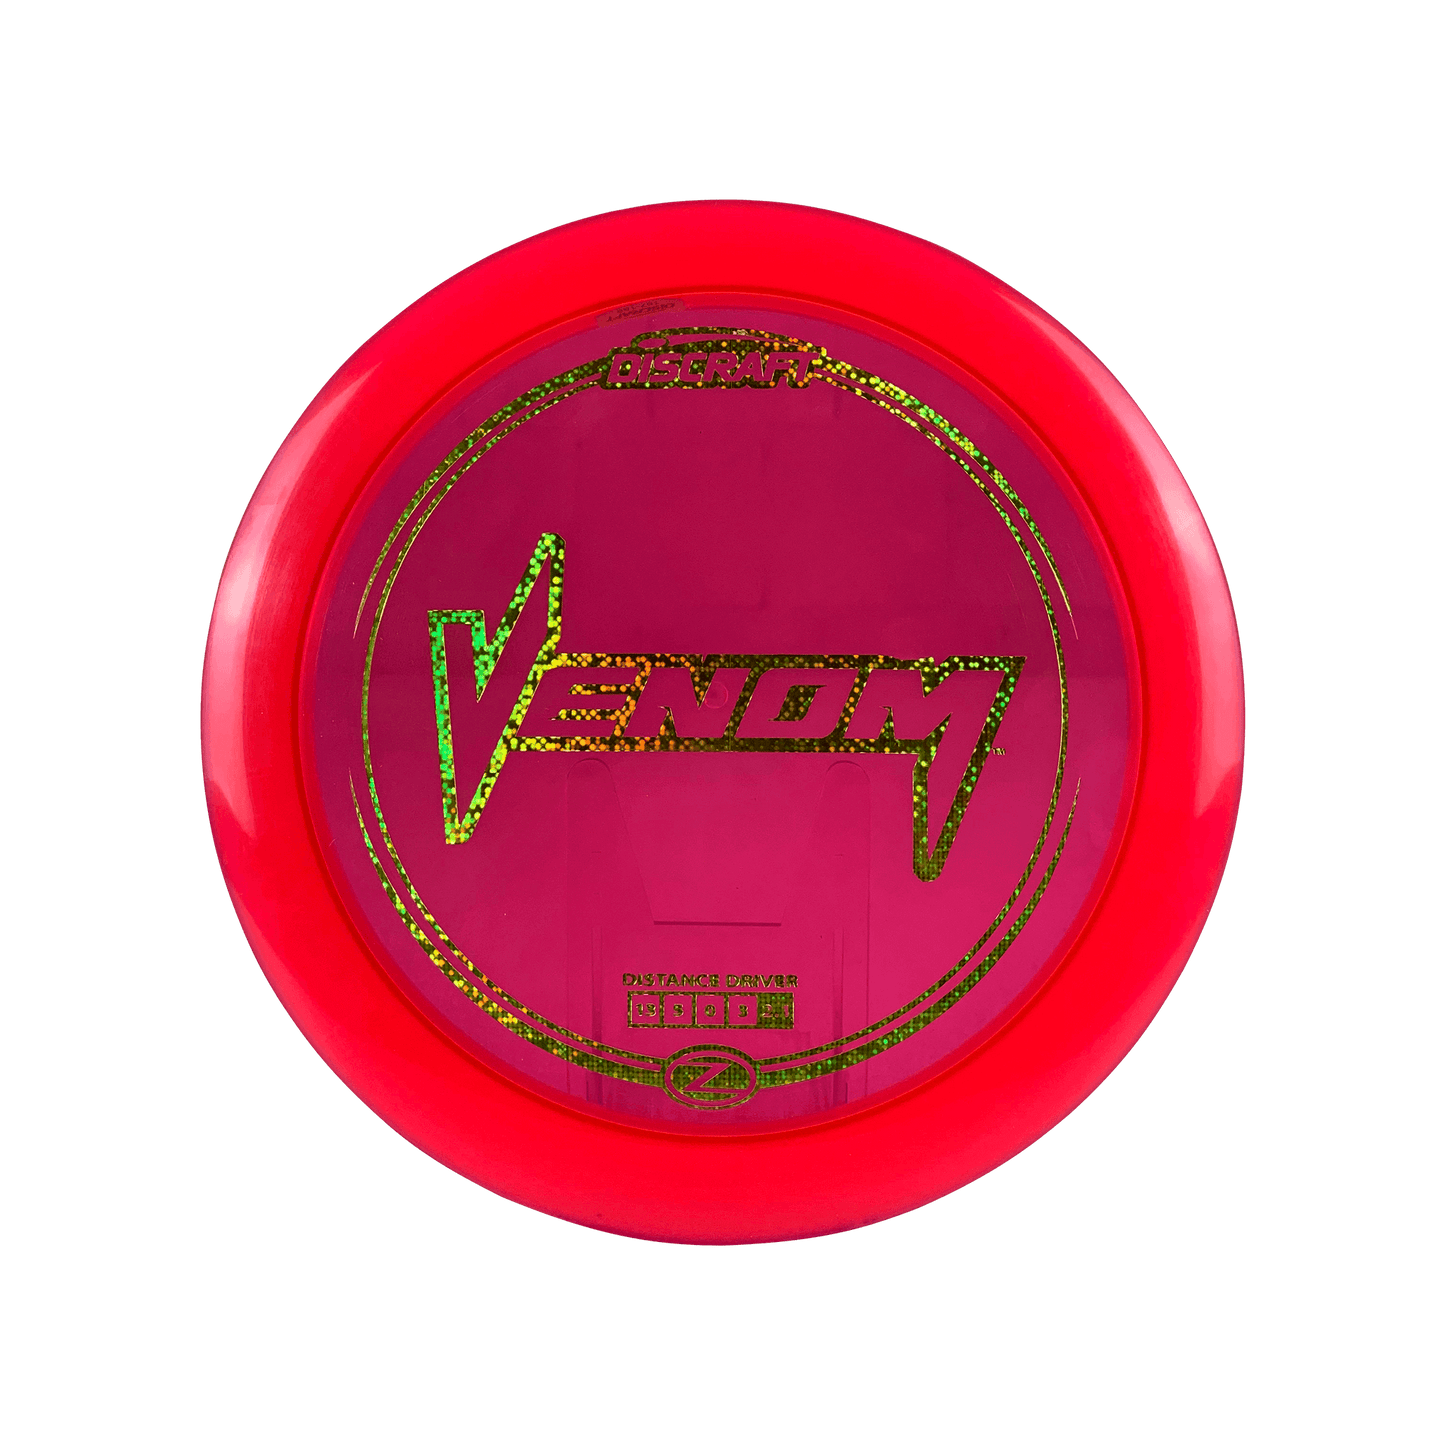 Z Venom Disc Discraft red 170 